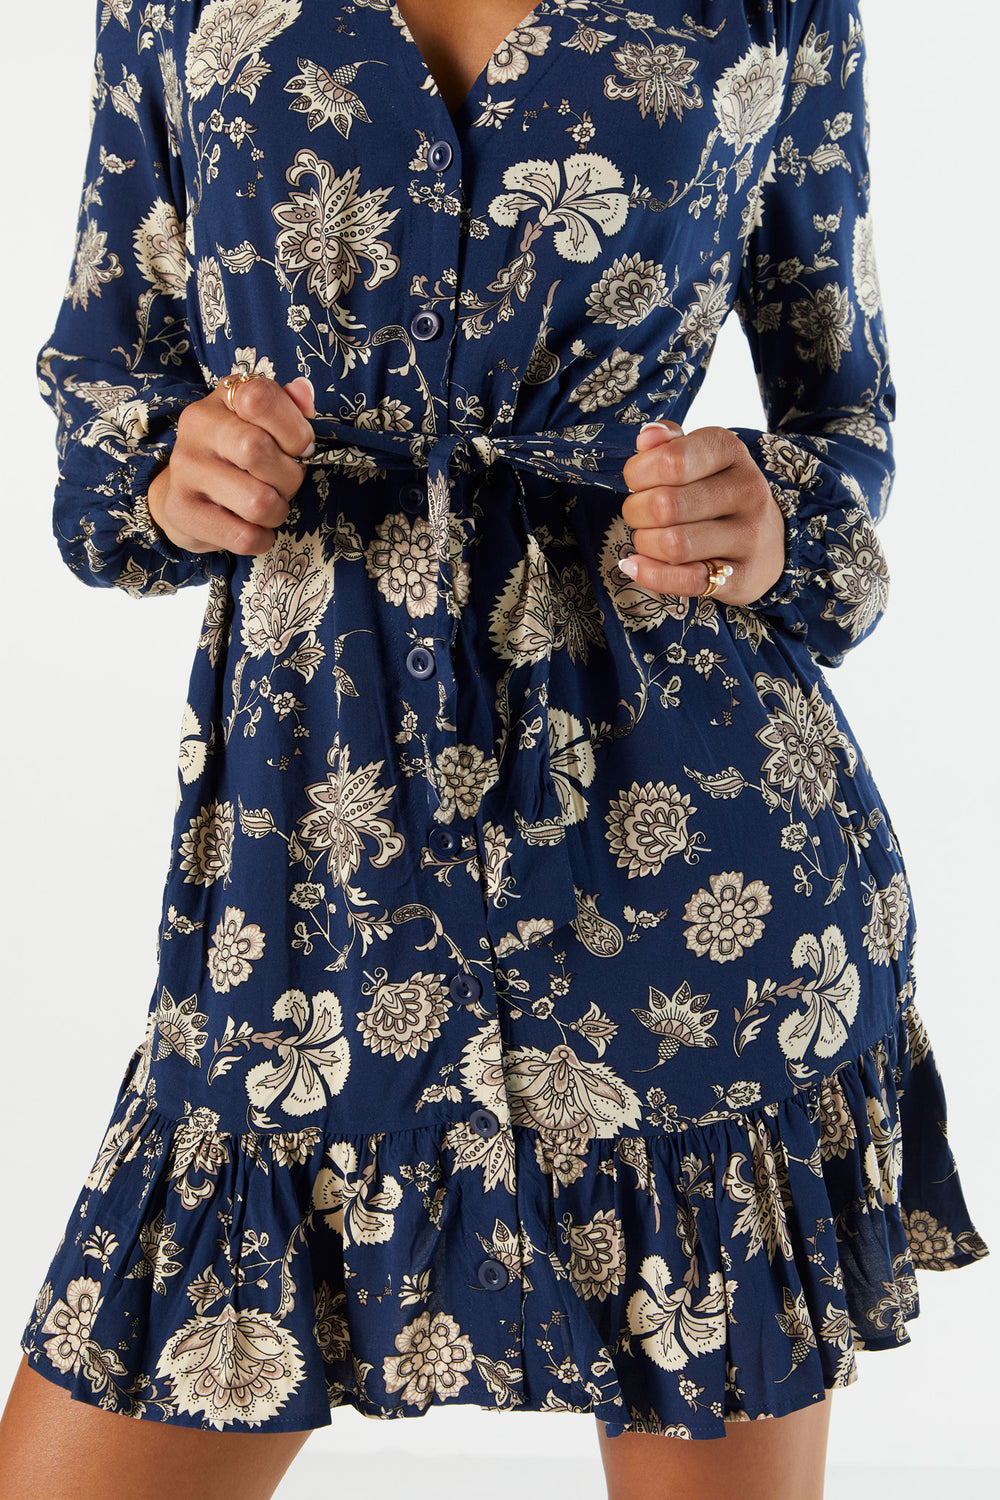 Blue Floral Print Belted Long Sleeve Dress Navy 4